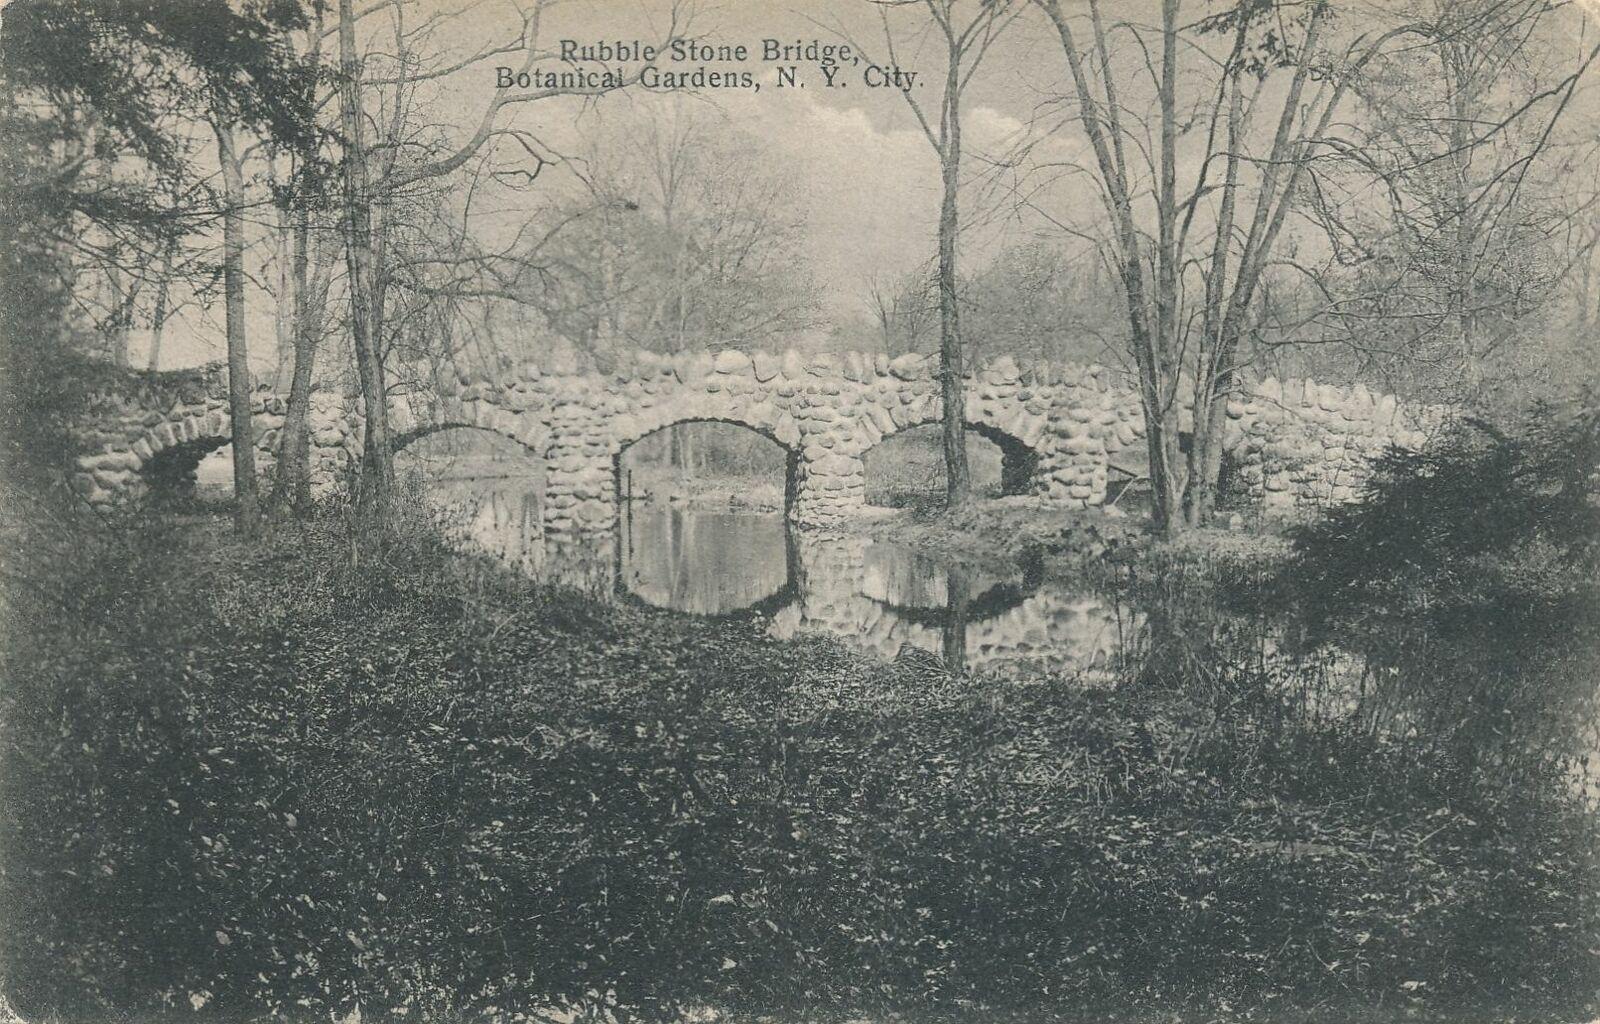 Botanical Gardens Rubble Stone Bridge Rotograph Postcard - 1909